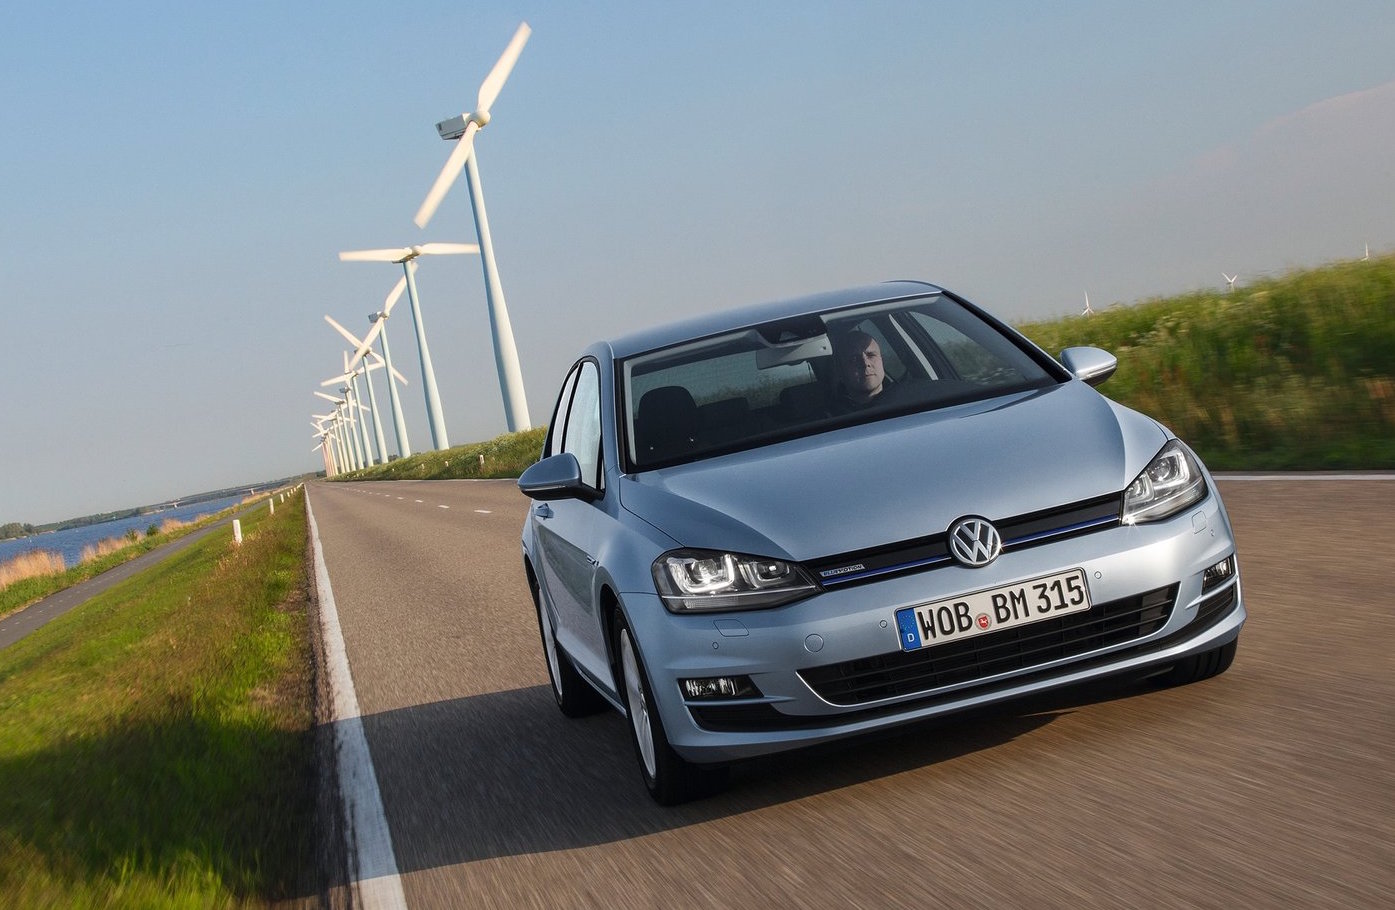 Volkswagen to contribute $200 million to pollution fund in U.S.